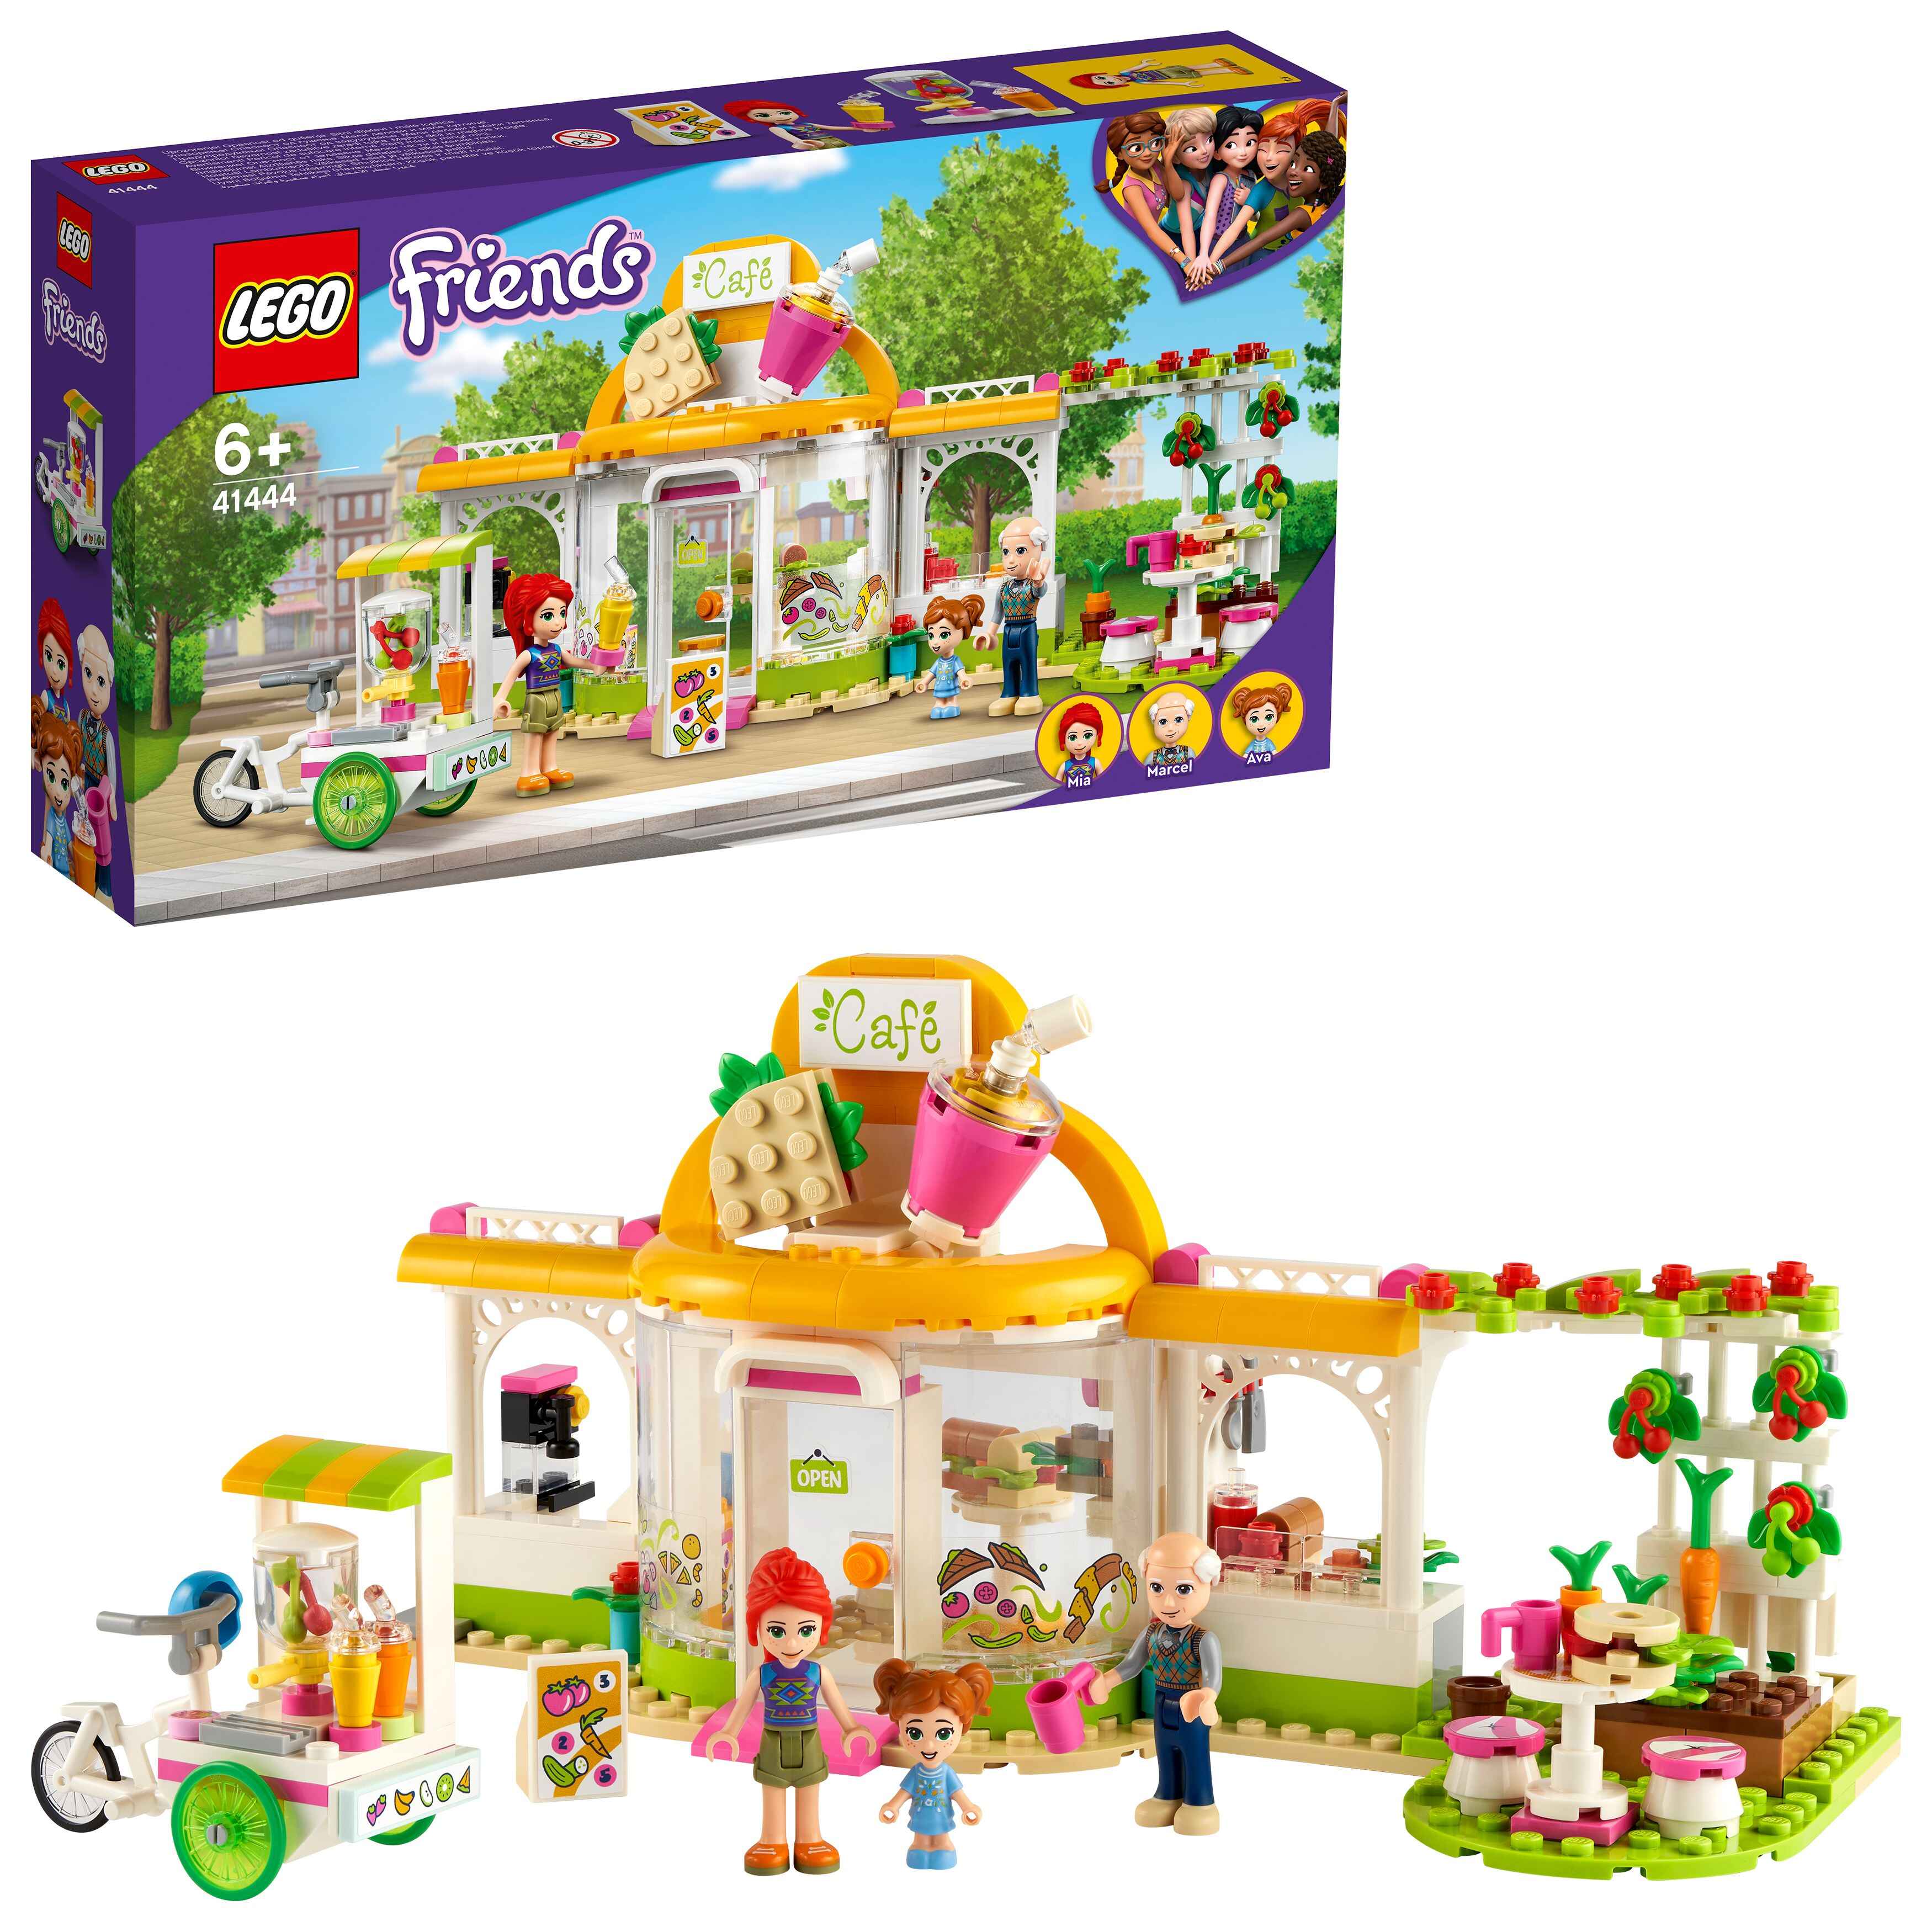 LEGO 41444 Friends Heartlake City Bio-Café, 3 Spielfiguren, Garten